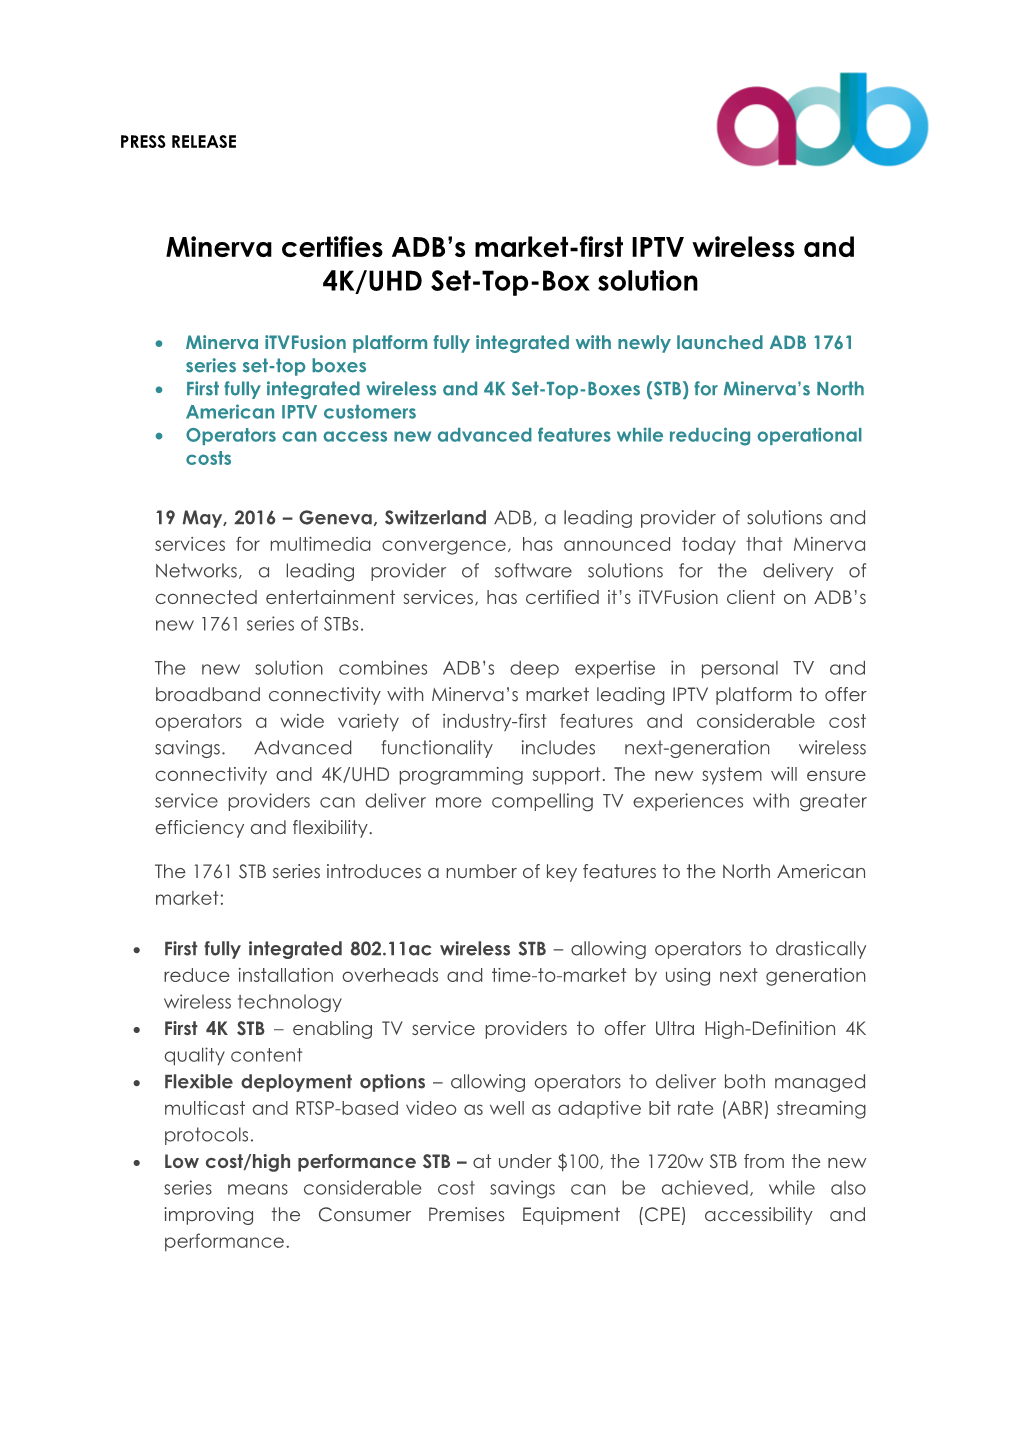 Minerva Certifies ADB's Market-First IPTV Wireless and 4K/UHD Set-Top